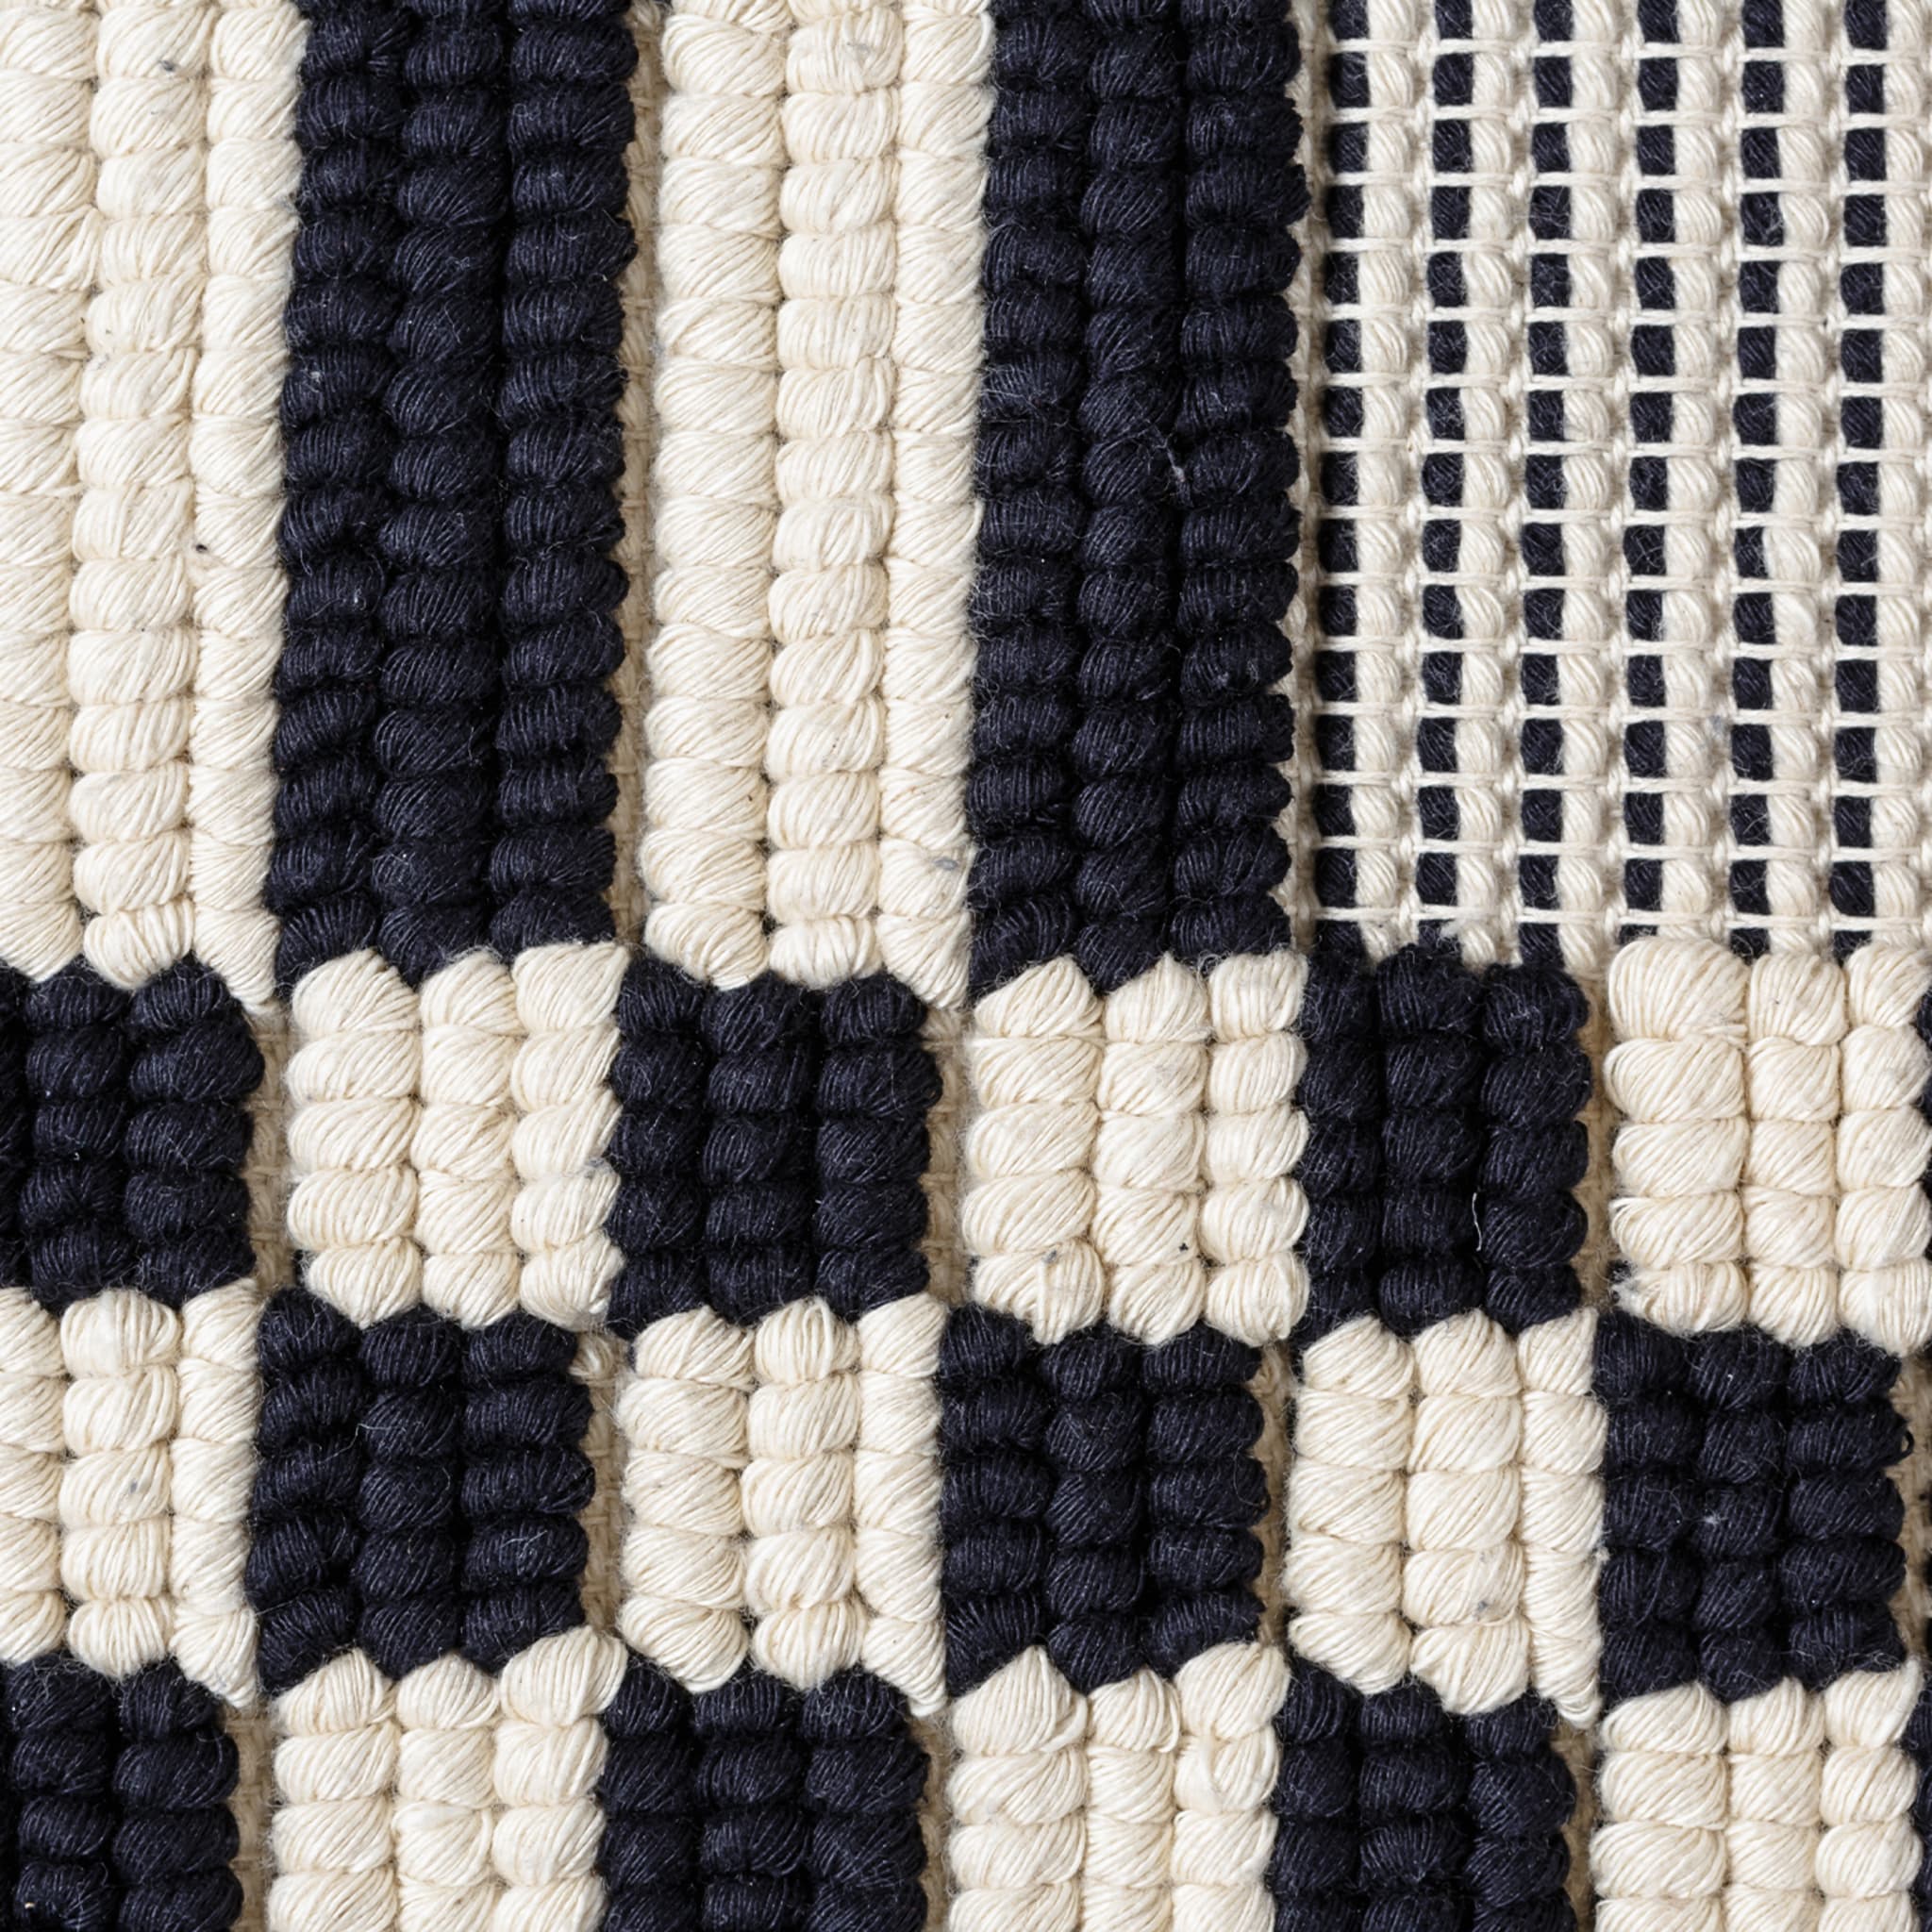 Bisaccia Checkered Black and White Rectangular Rug - Alternative view 1